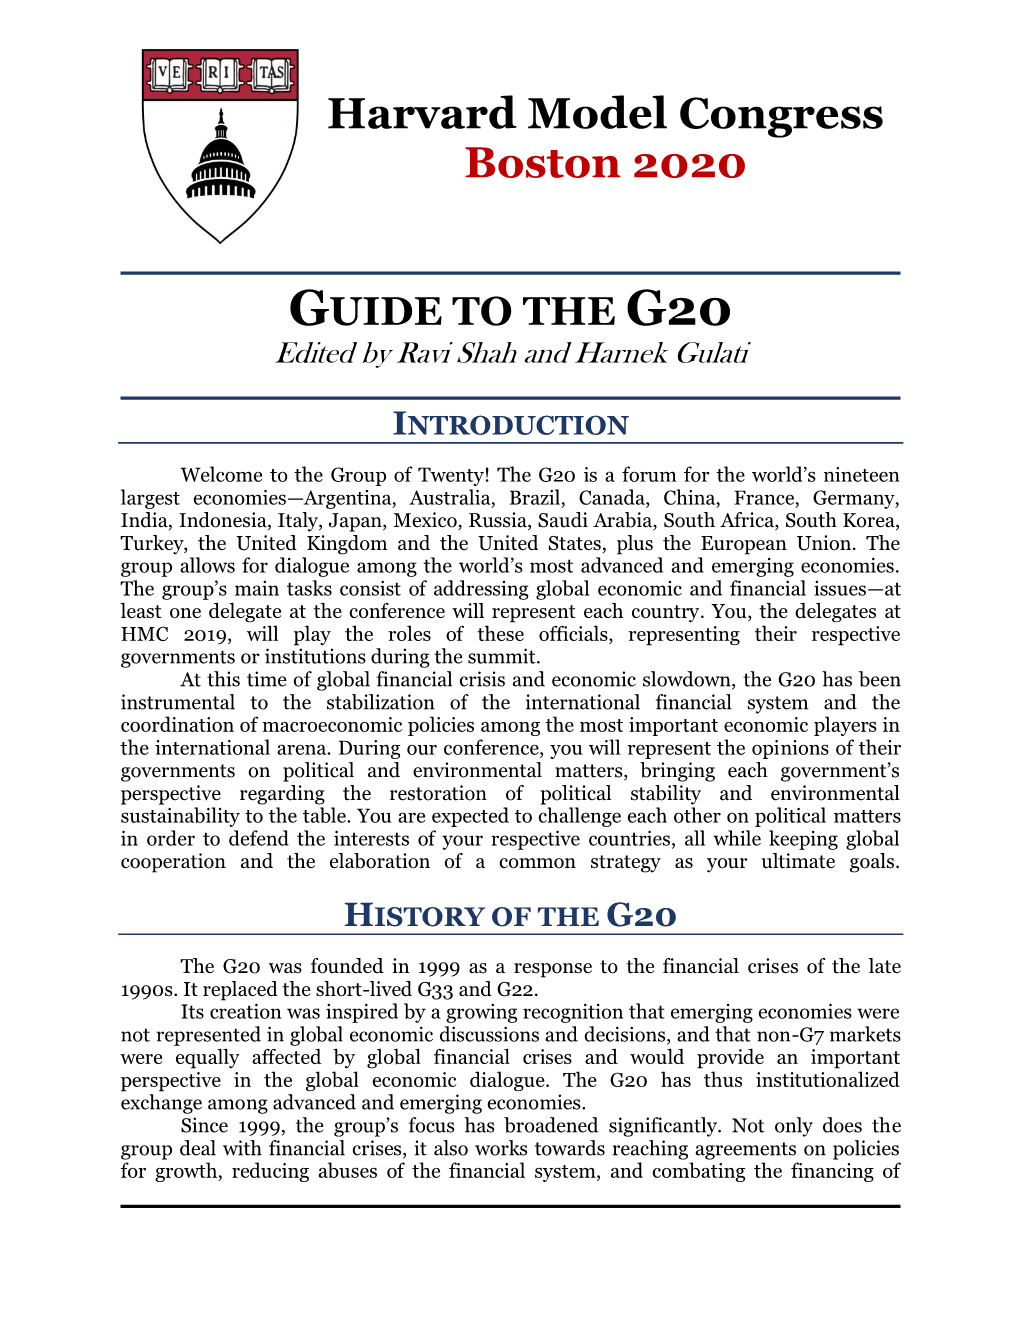 The G20 at Hmc Boston